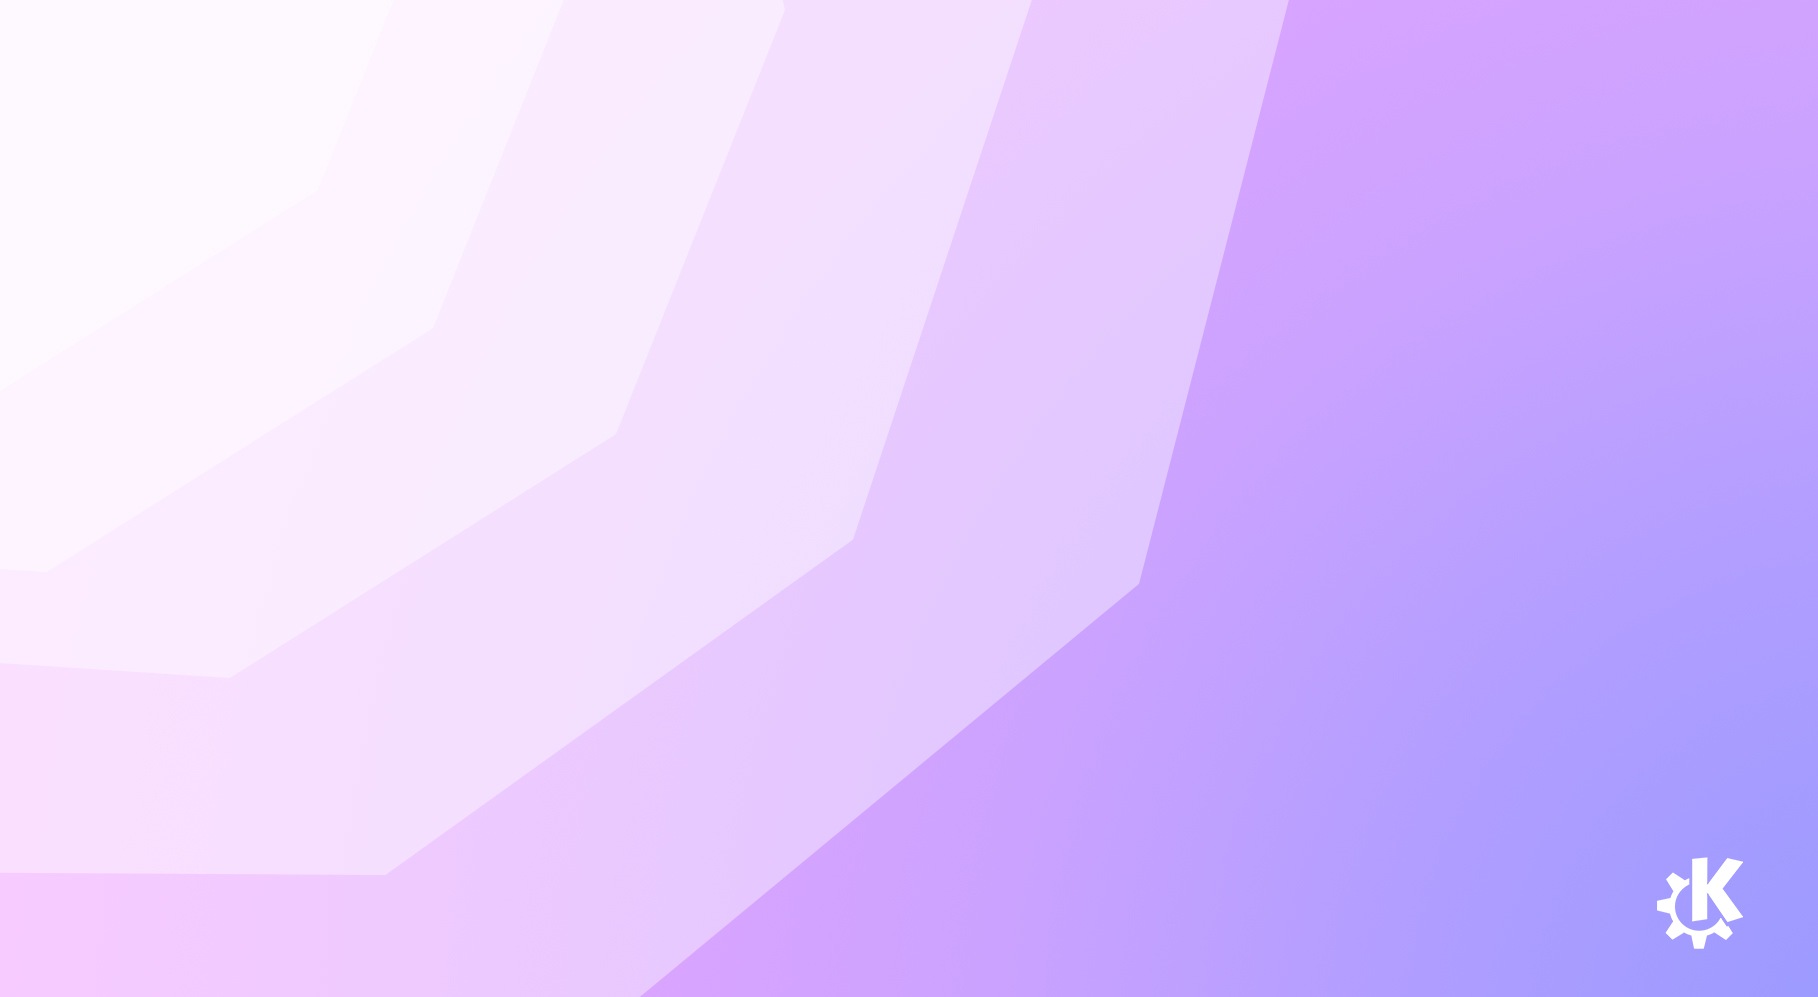 KDE abstract wallpaper 33 light purple